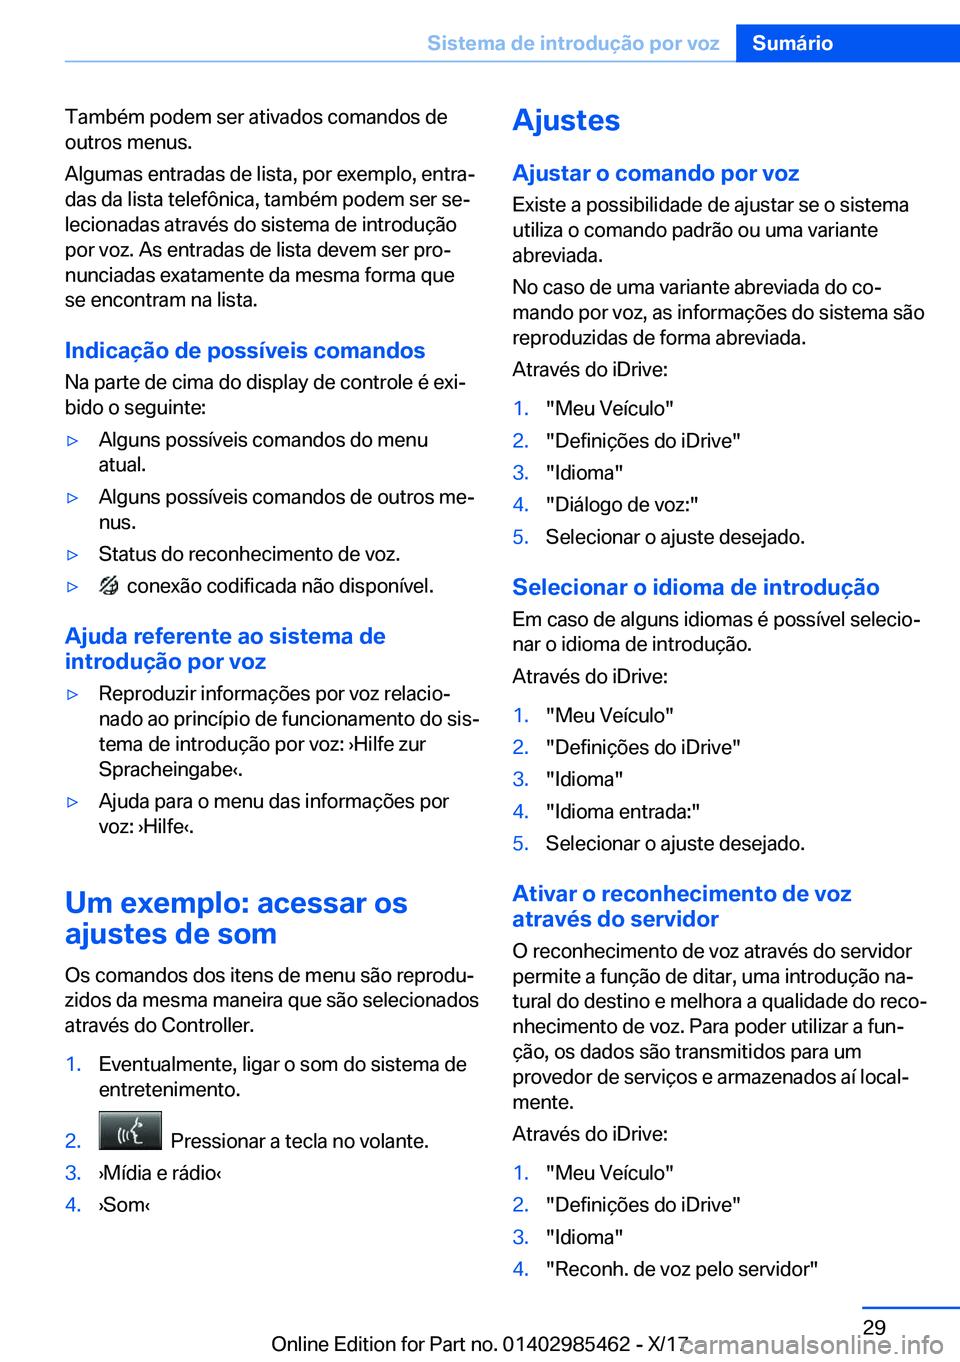 BMW X1 2018  Manual do condutor (in Portuguese) �T�a�m�b�é�m� �p�o�d�e�m� �s�e�r� �a�t�i�v�a�d�o�s� �c�o�m�a�n�d�o�s� �d�e�o�u�t�r�o�s� �m�e�n�u�s�.
�A�l�g�u�m�a�s� �e�n�t�r�a�d�a�s� �d�e� �l�i�s�t�a�,� �p�o�r� �e�x�e�m�p�l�o�,� �e�n�t�r�aª
�d�a